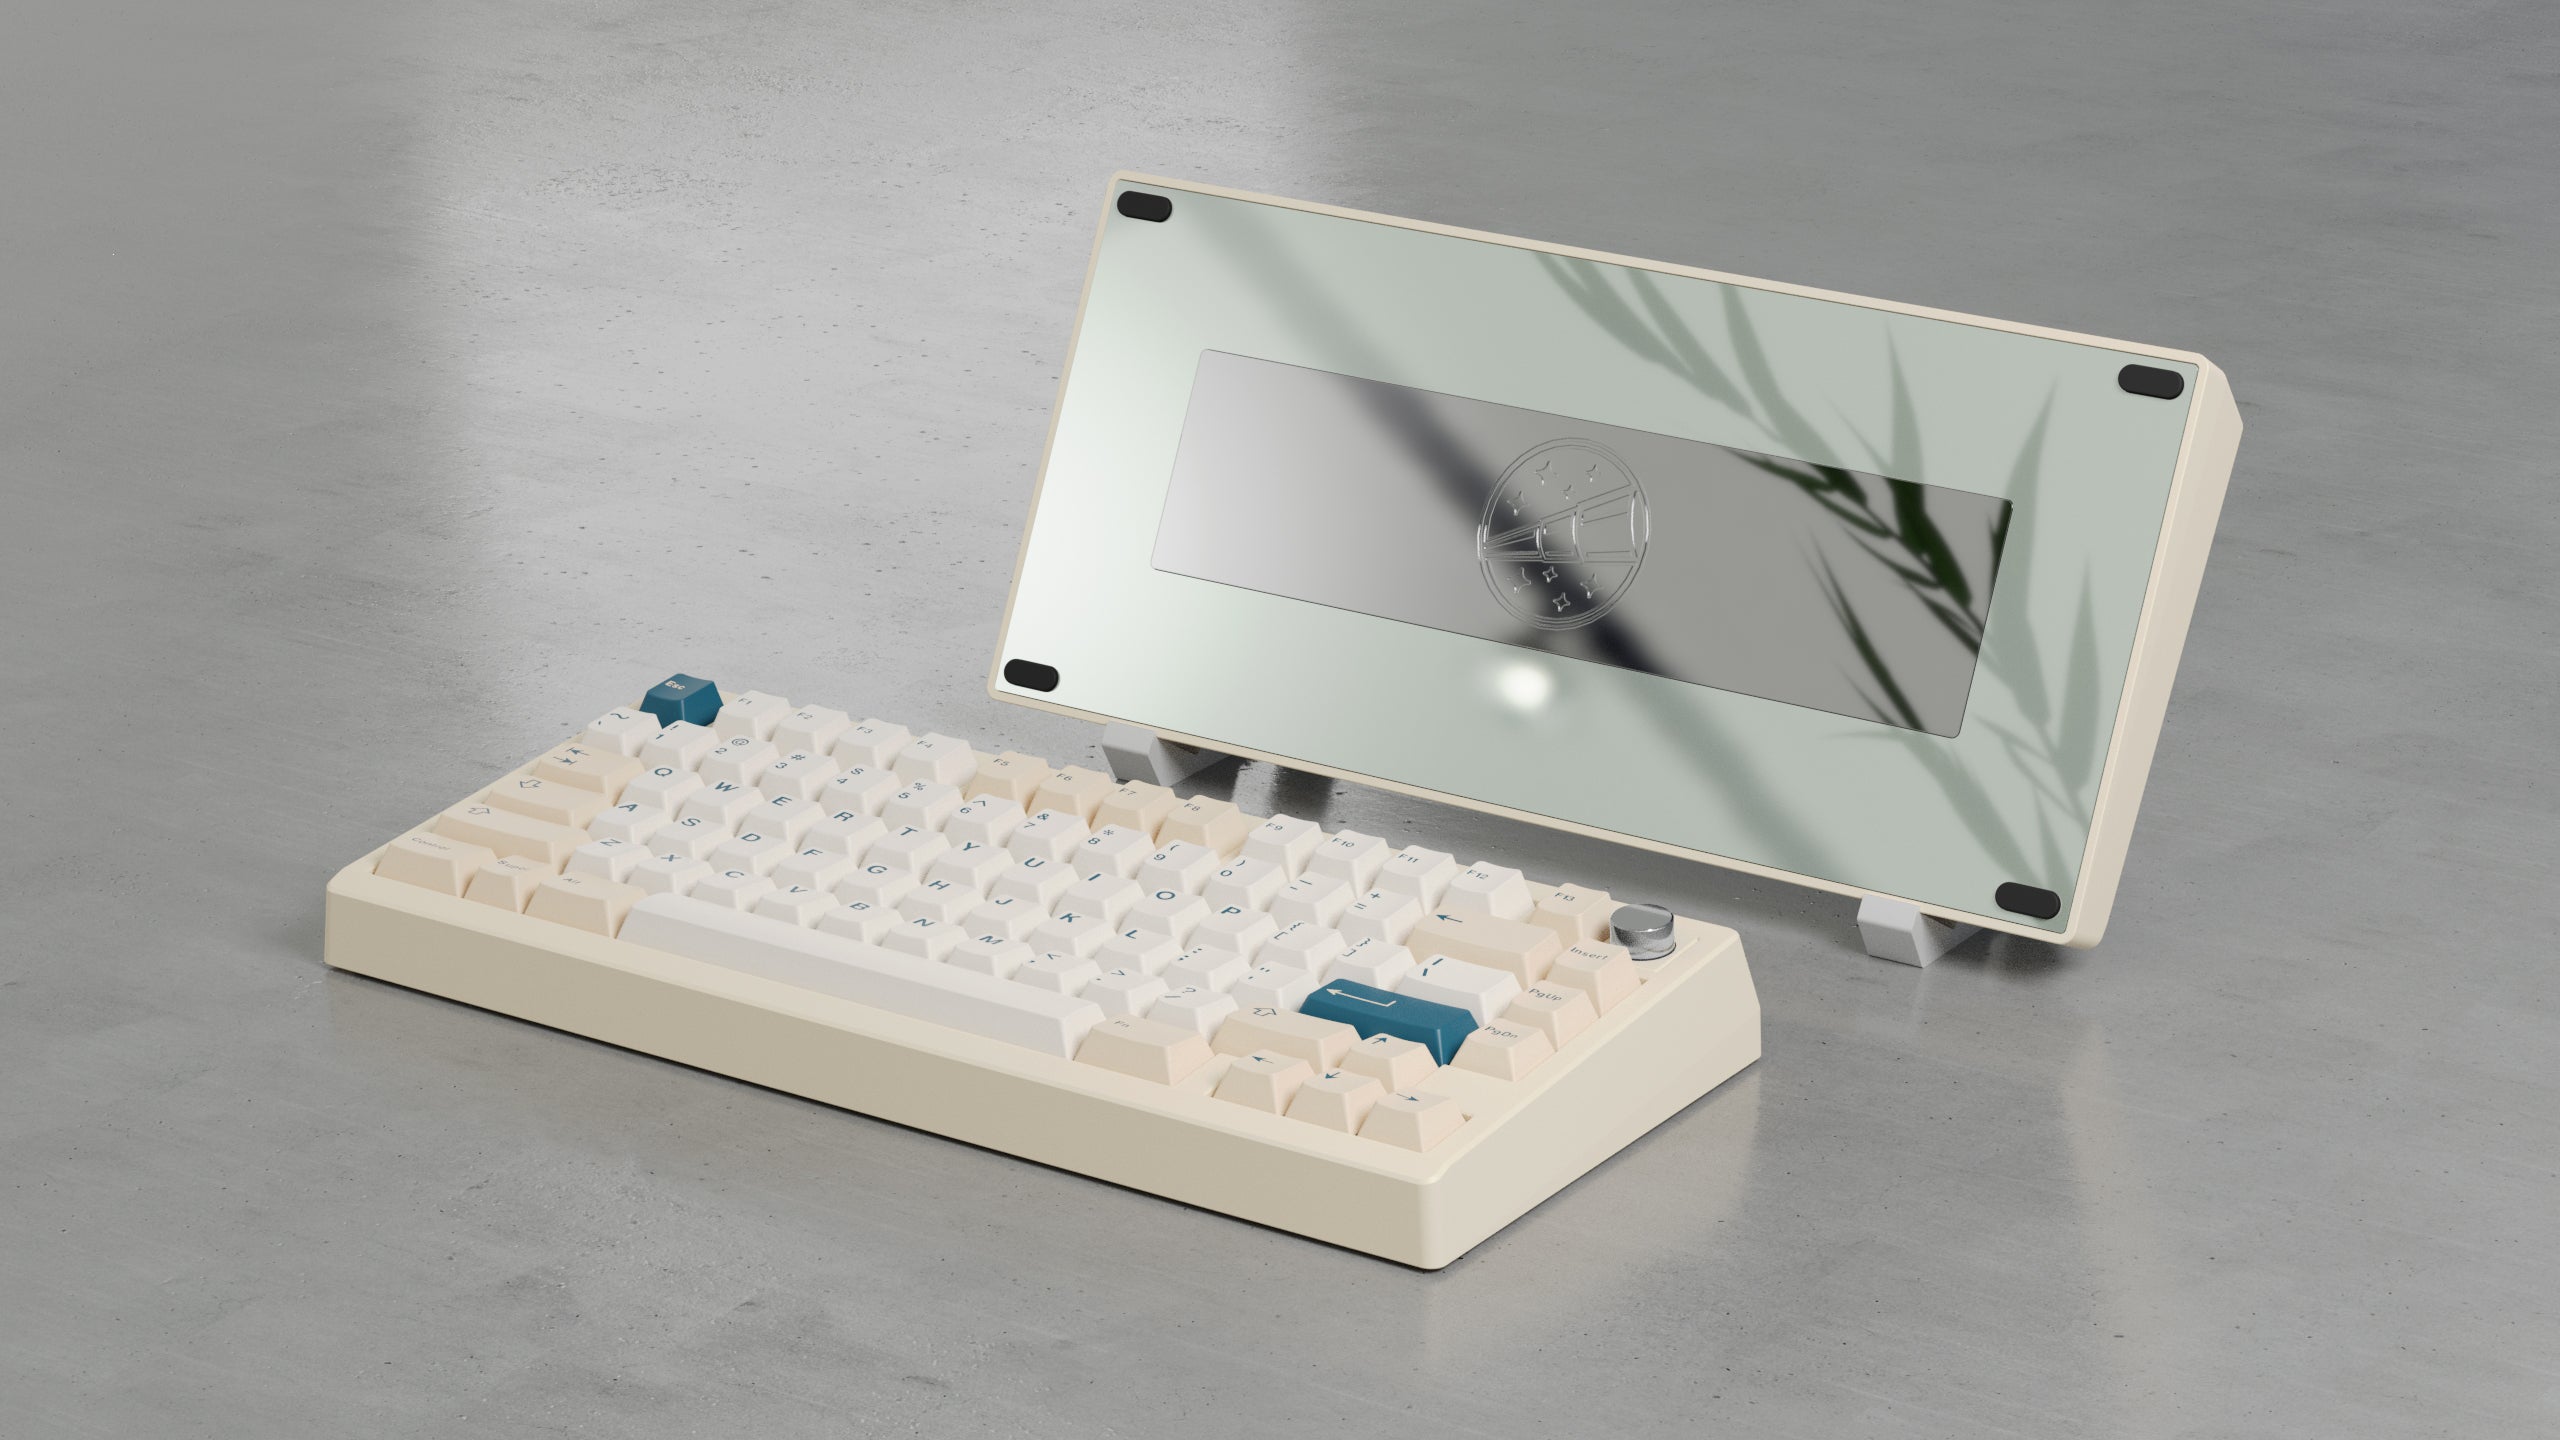 Zoom75 EE Keyboard - Milk Tea [Preorder]